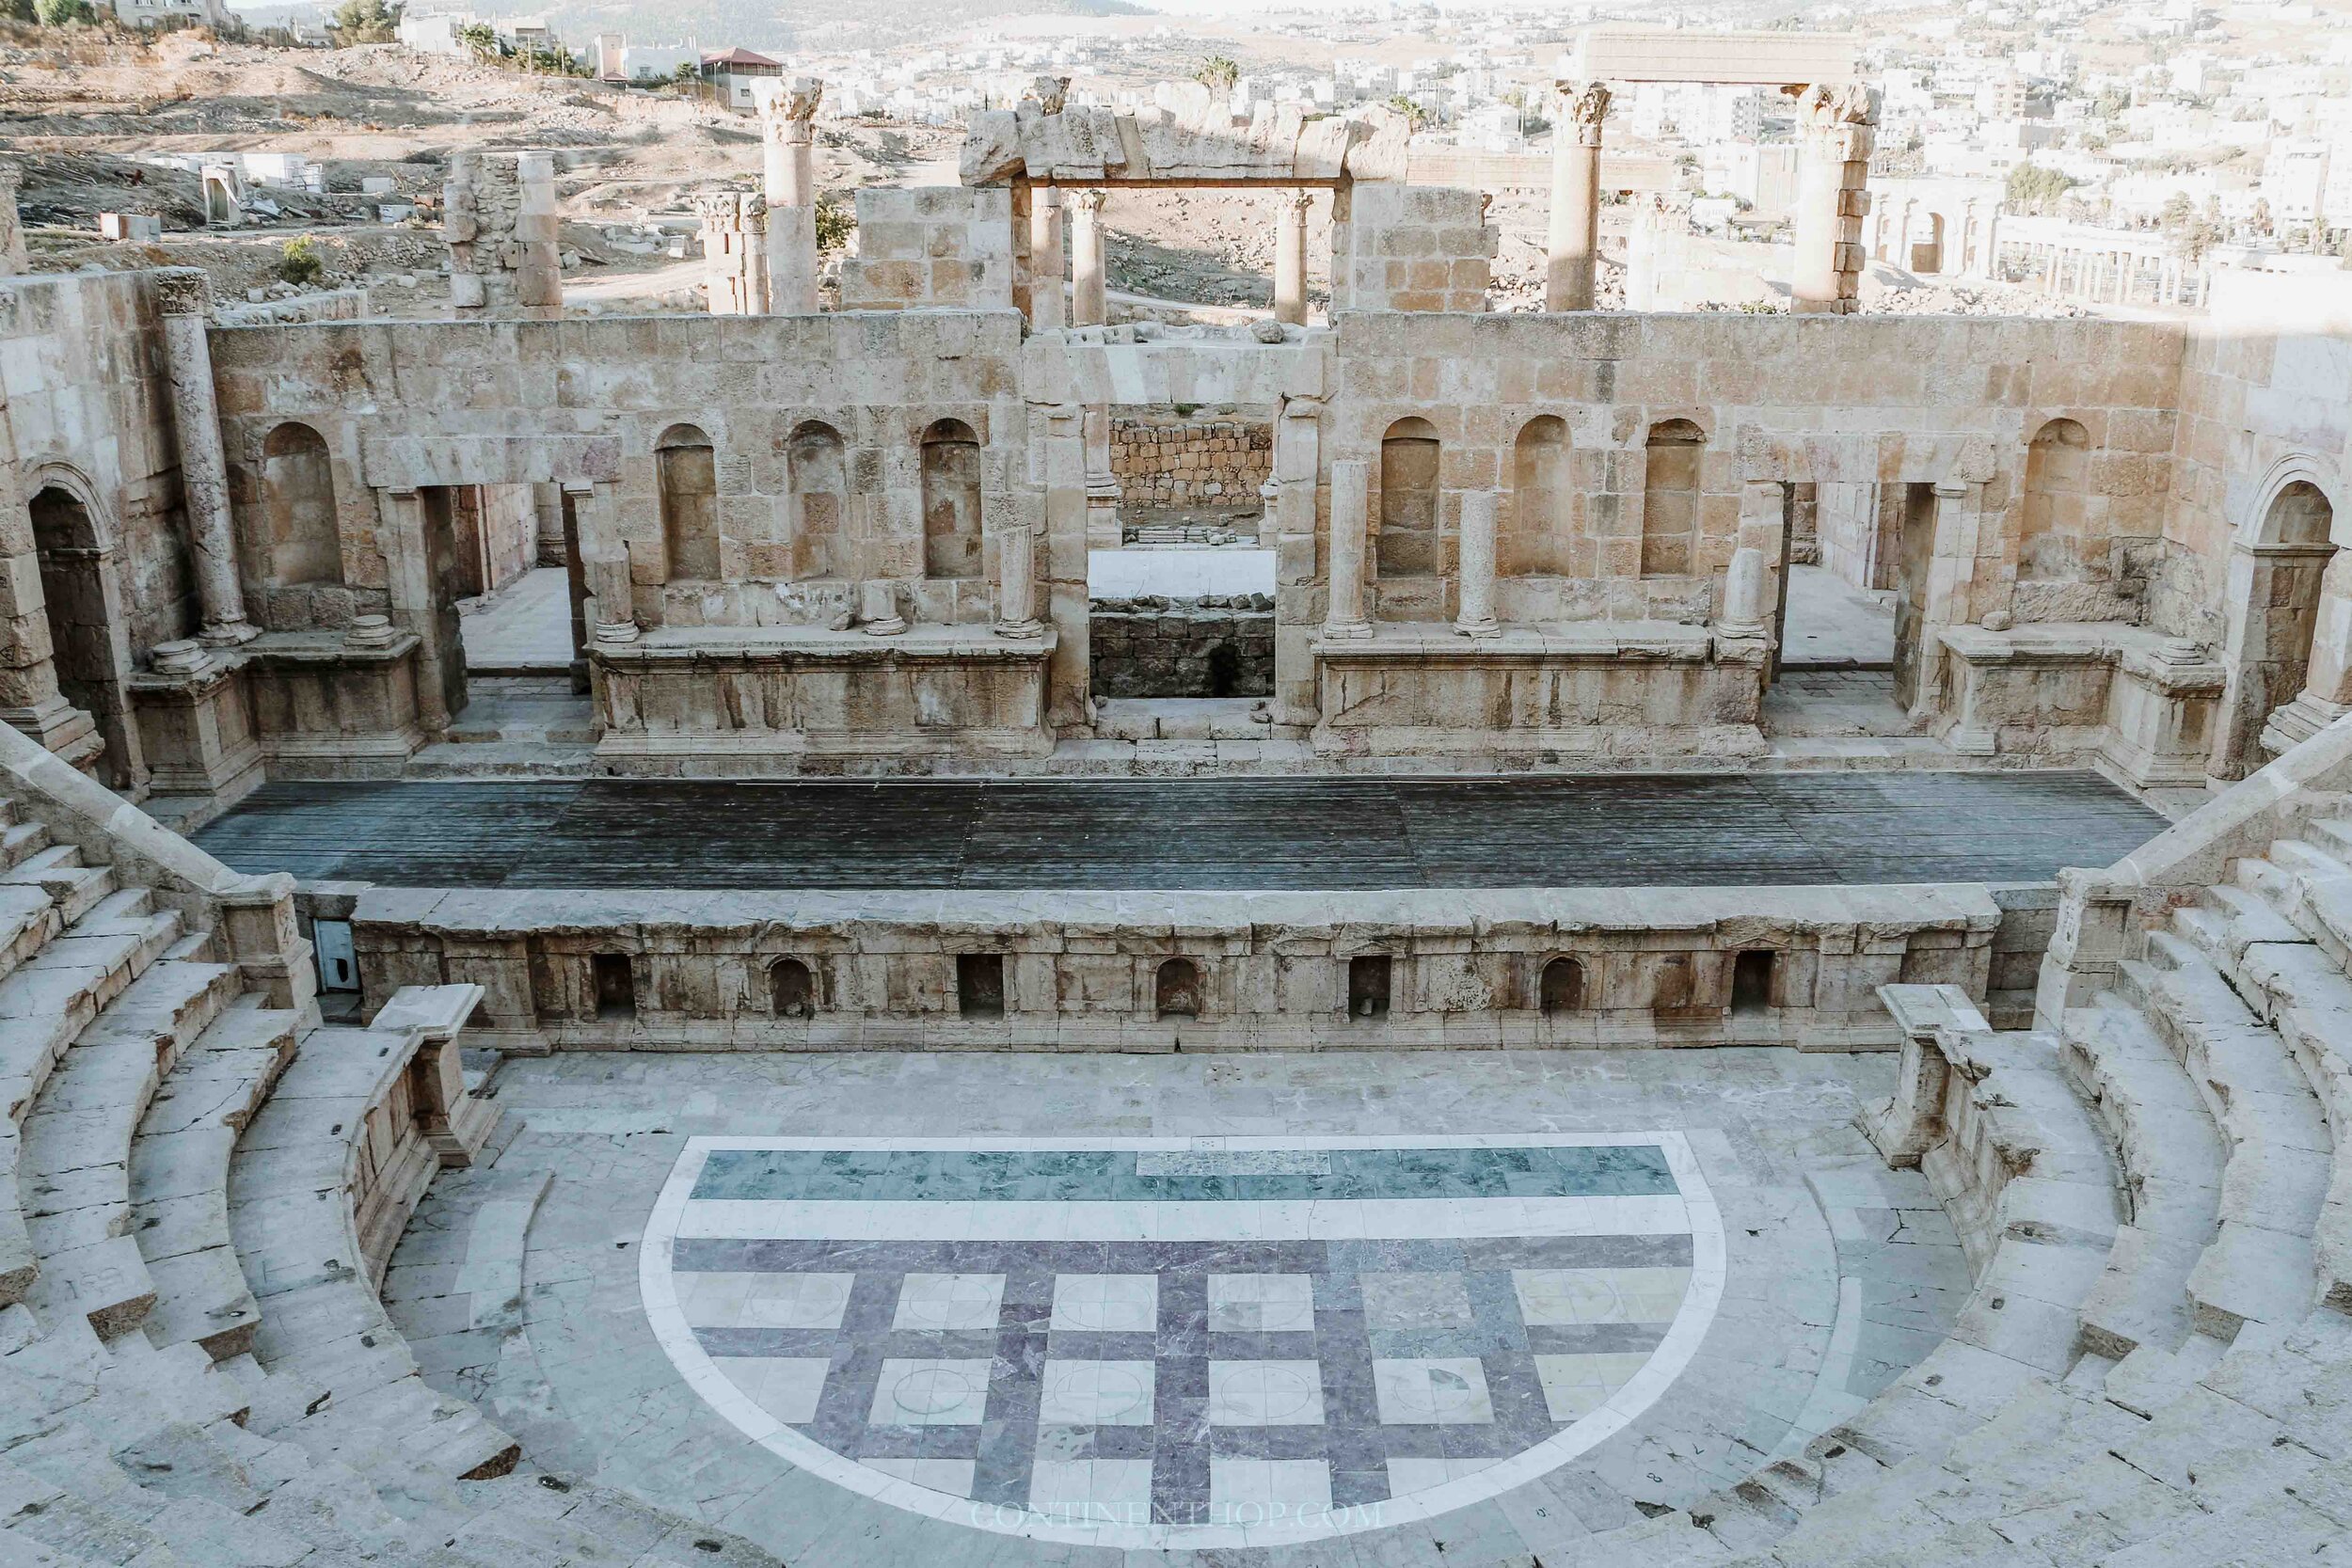 Jordan country image of the amphitheatre in Jerash